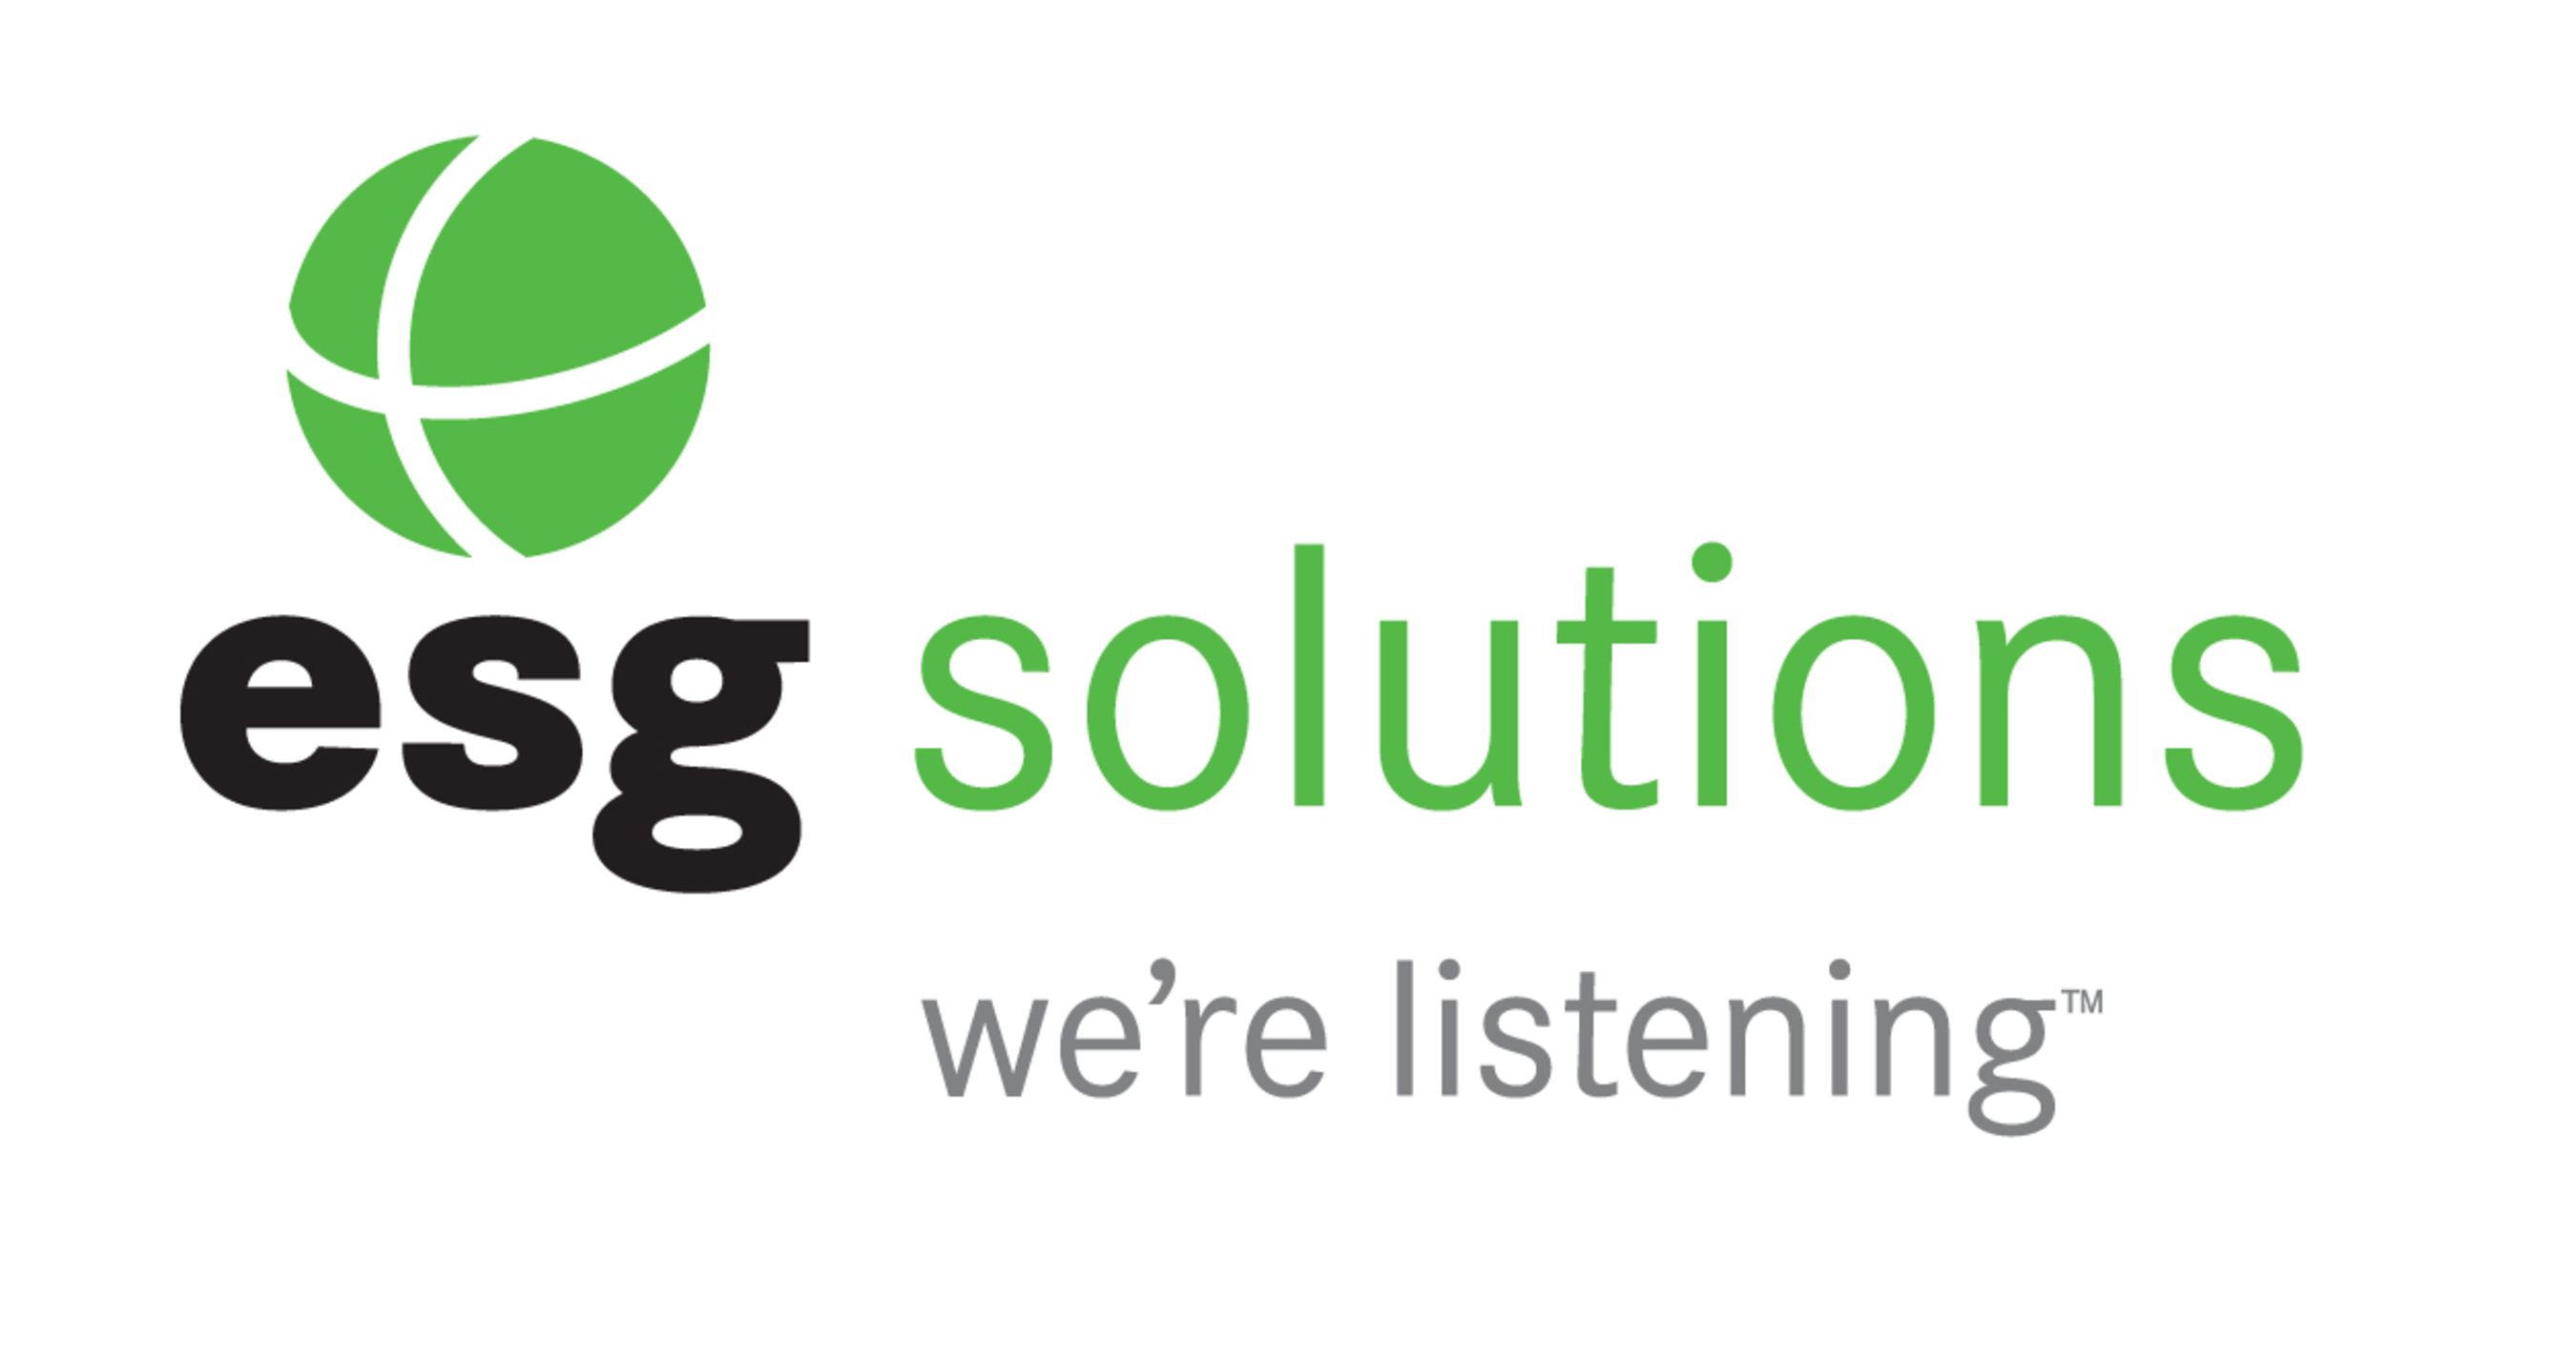 ESG Solutions Logo. (PRNewsFoto/ESG Solutions) (PRNewsFoto/)